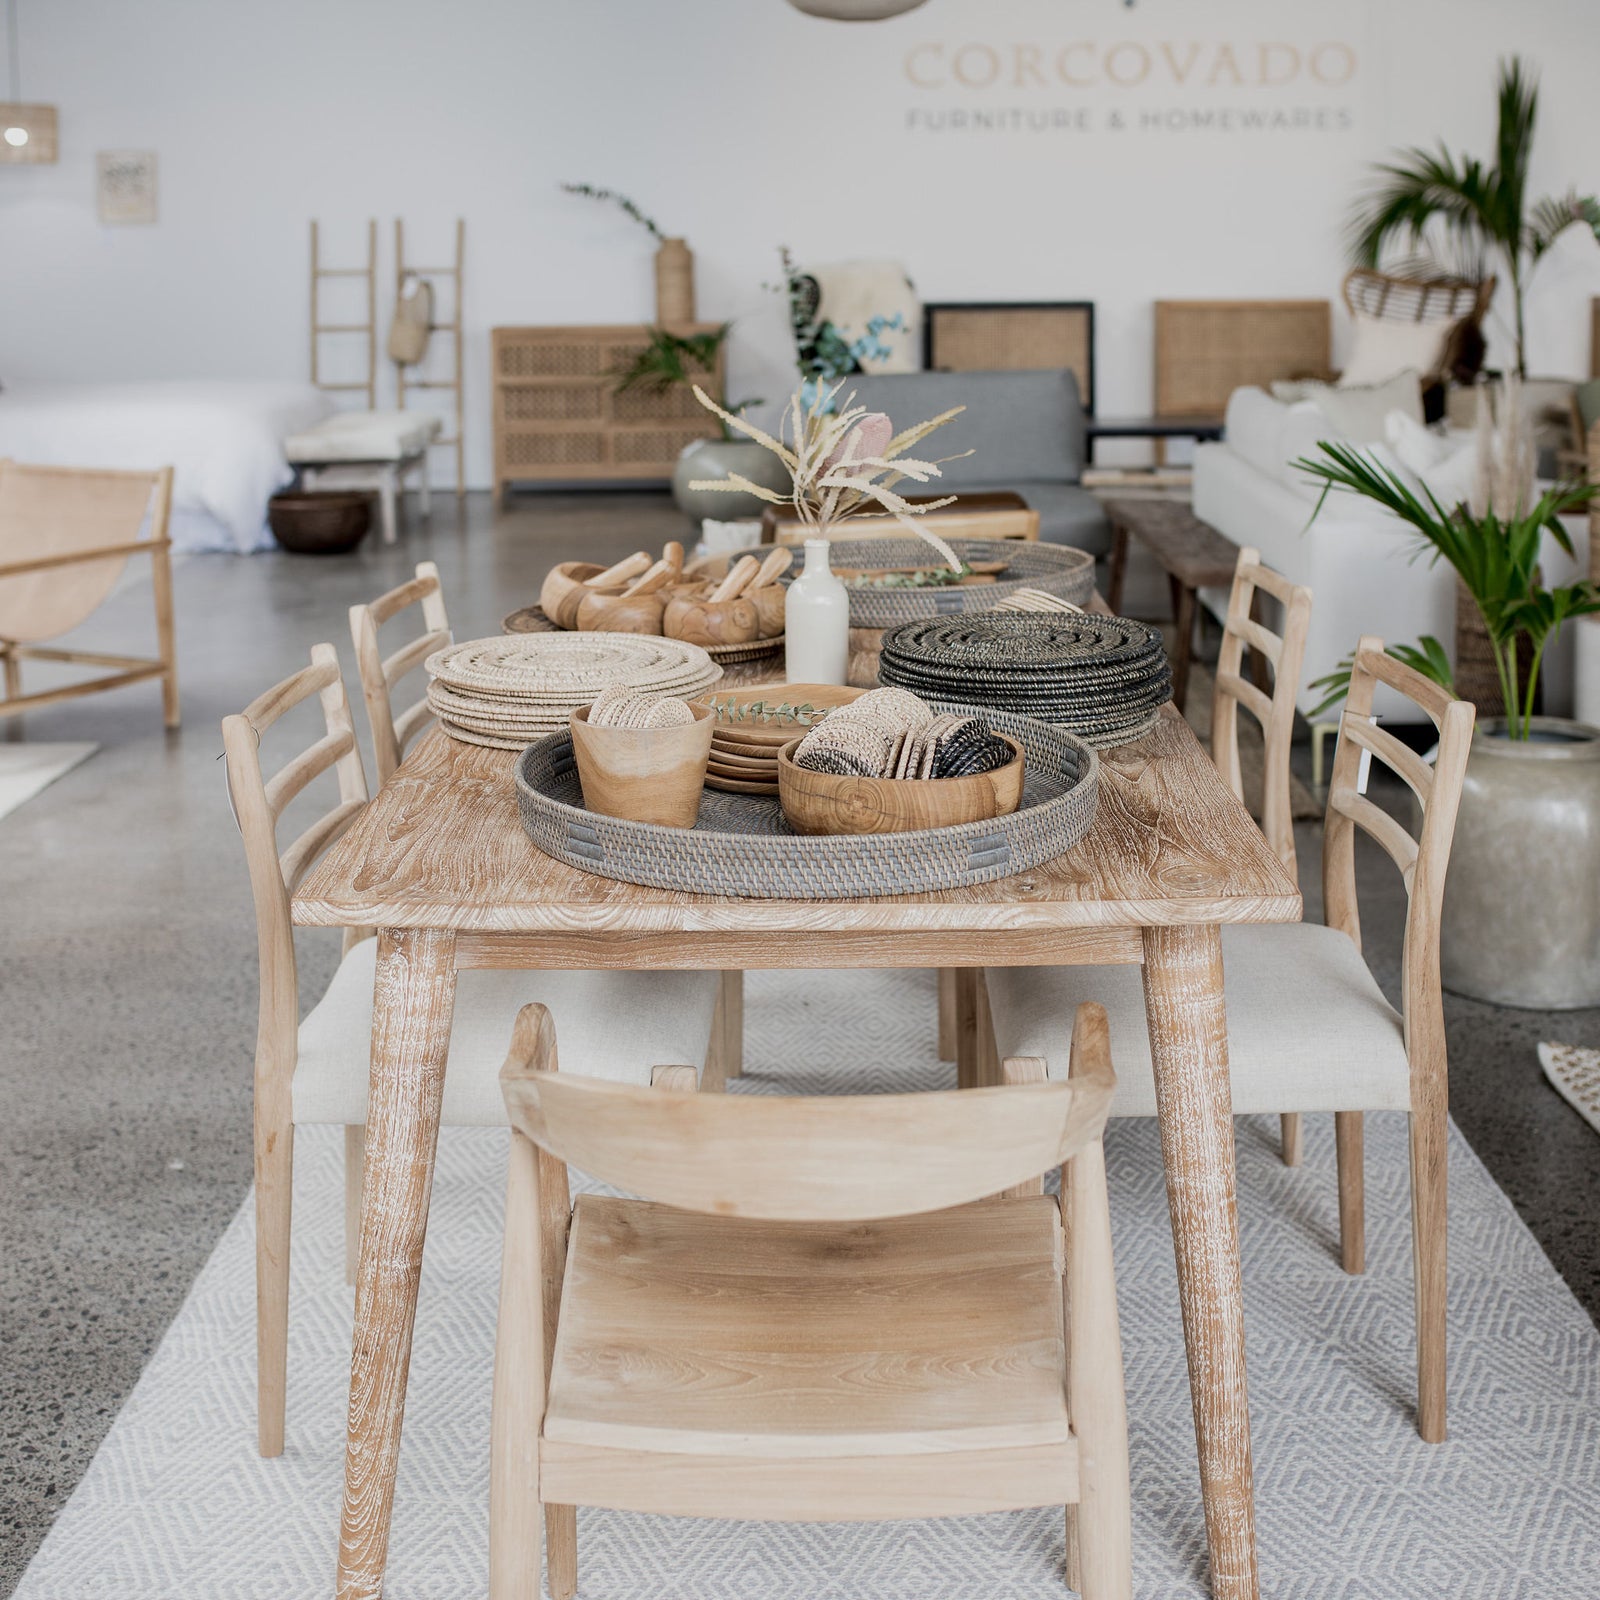 Corcovado Furniture Designed In Nz Shop Online For Level 3 Delivery